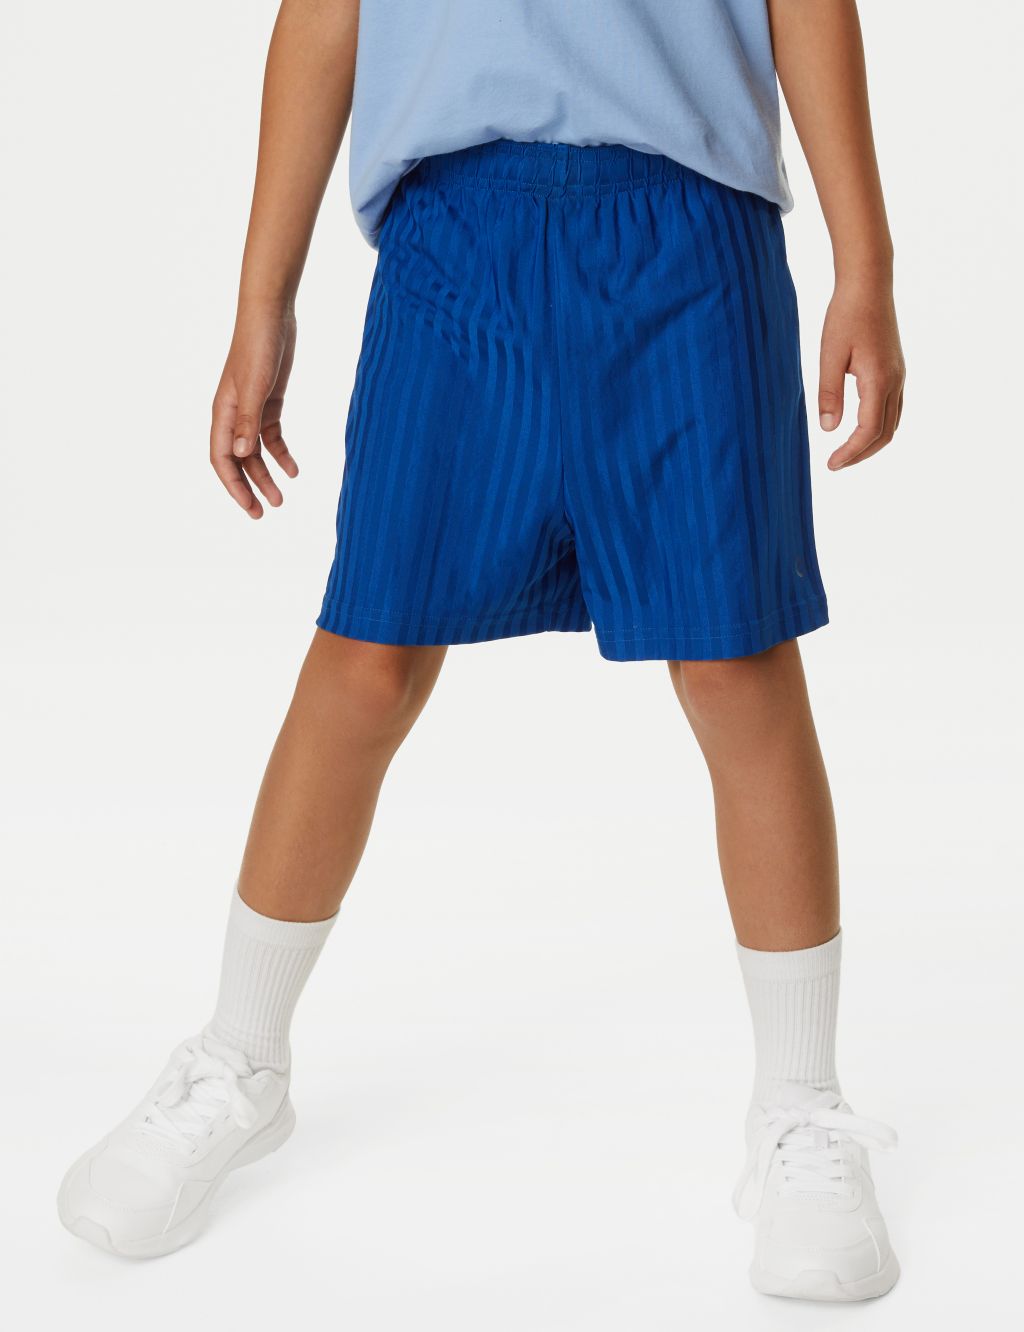 Unisex Sports School Shorts (2-16 Yrs) image 4